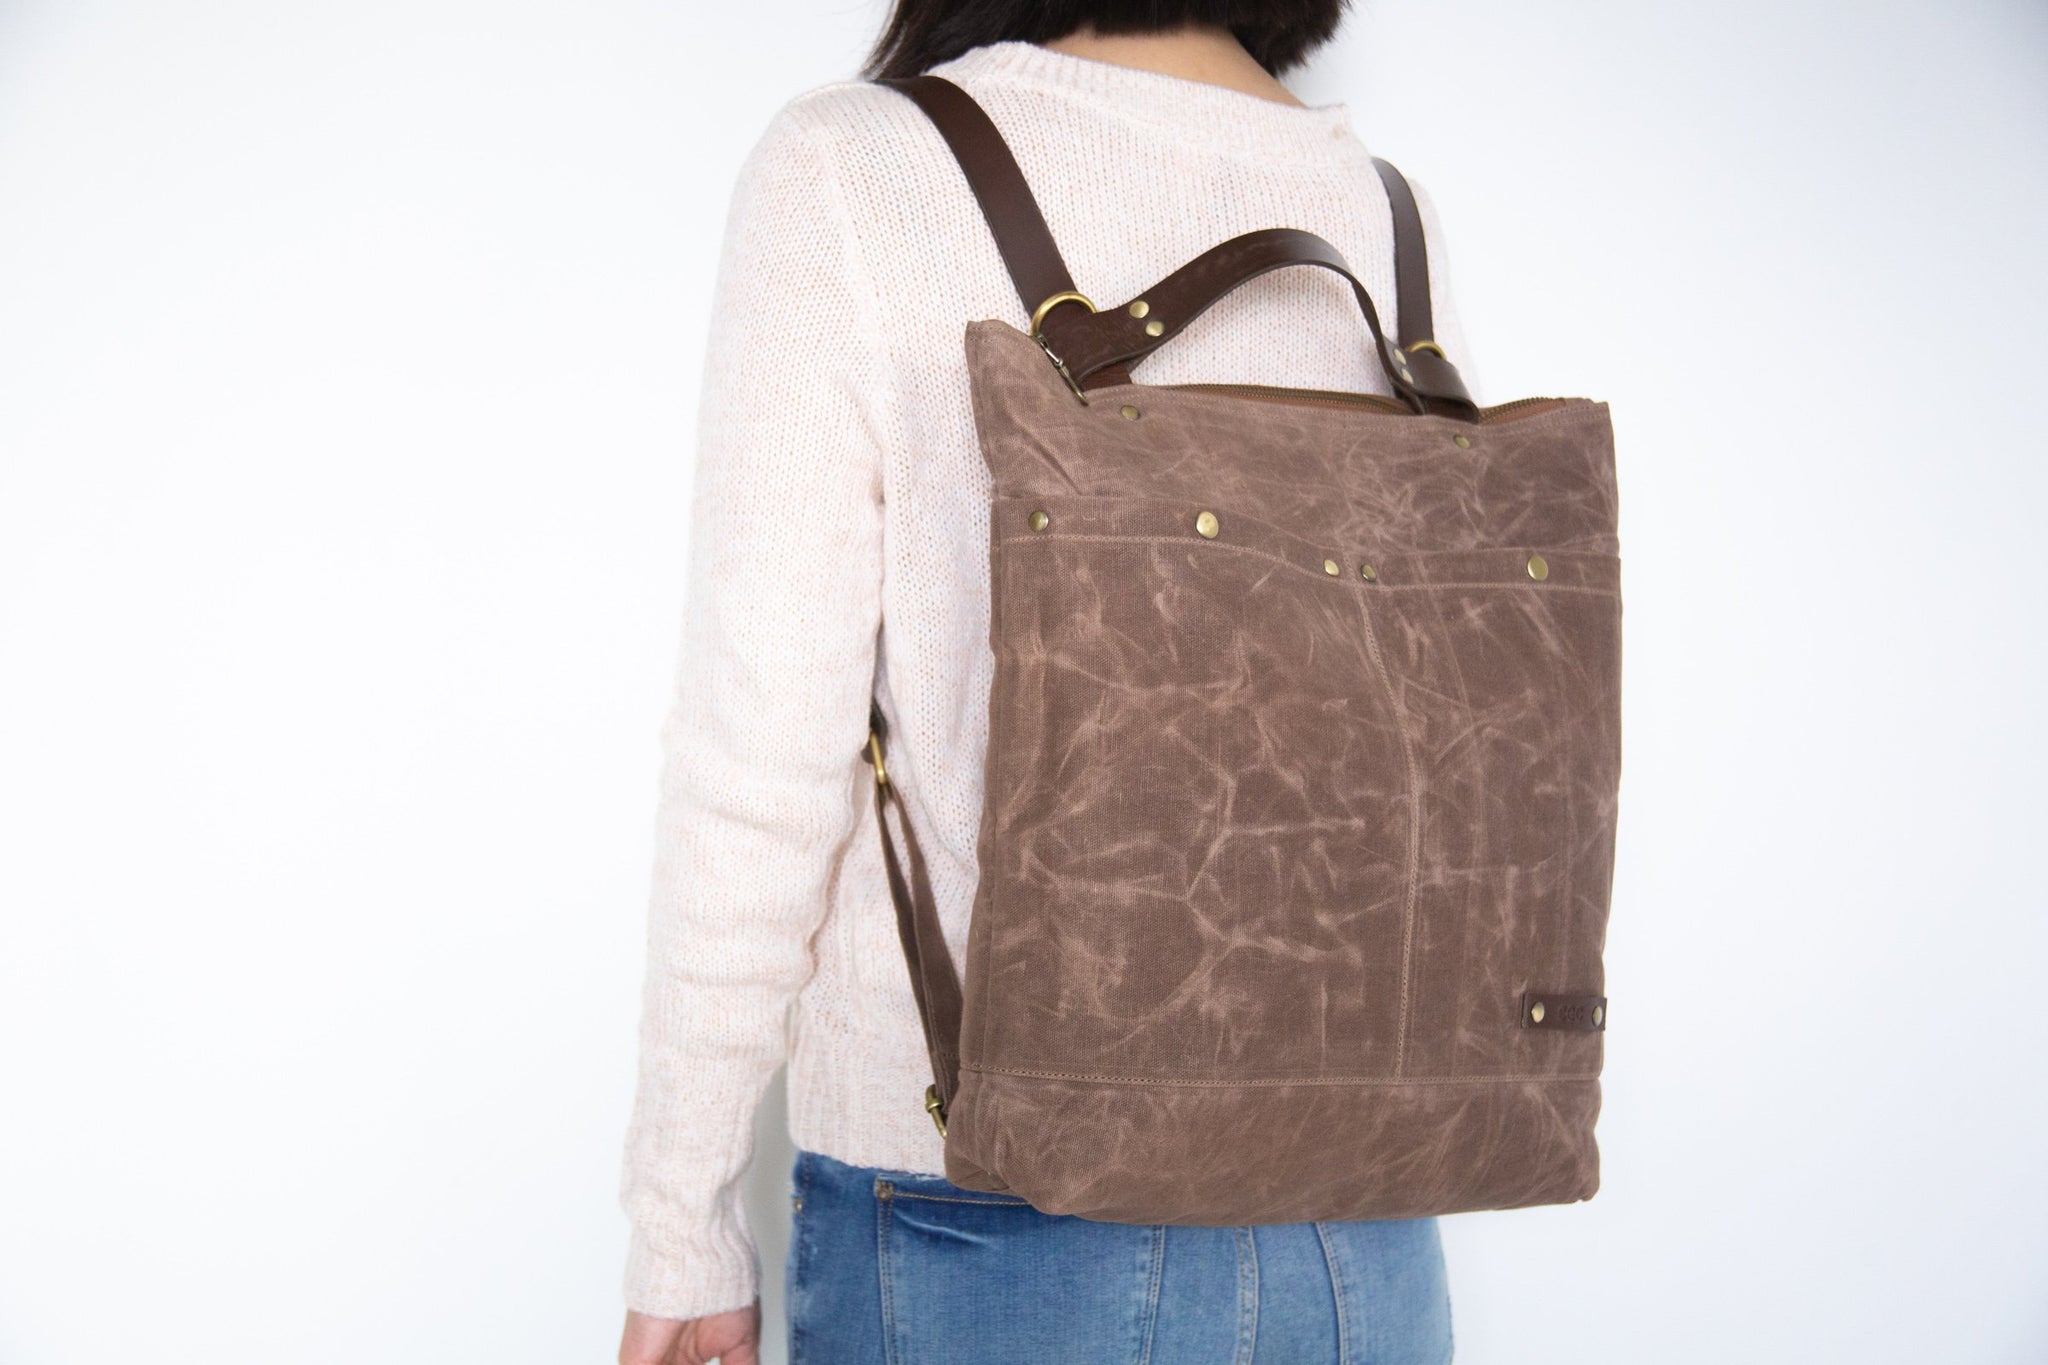  CYUREAY Women Convertible Tote Daypack Laptop Backpack